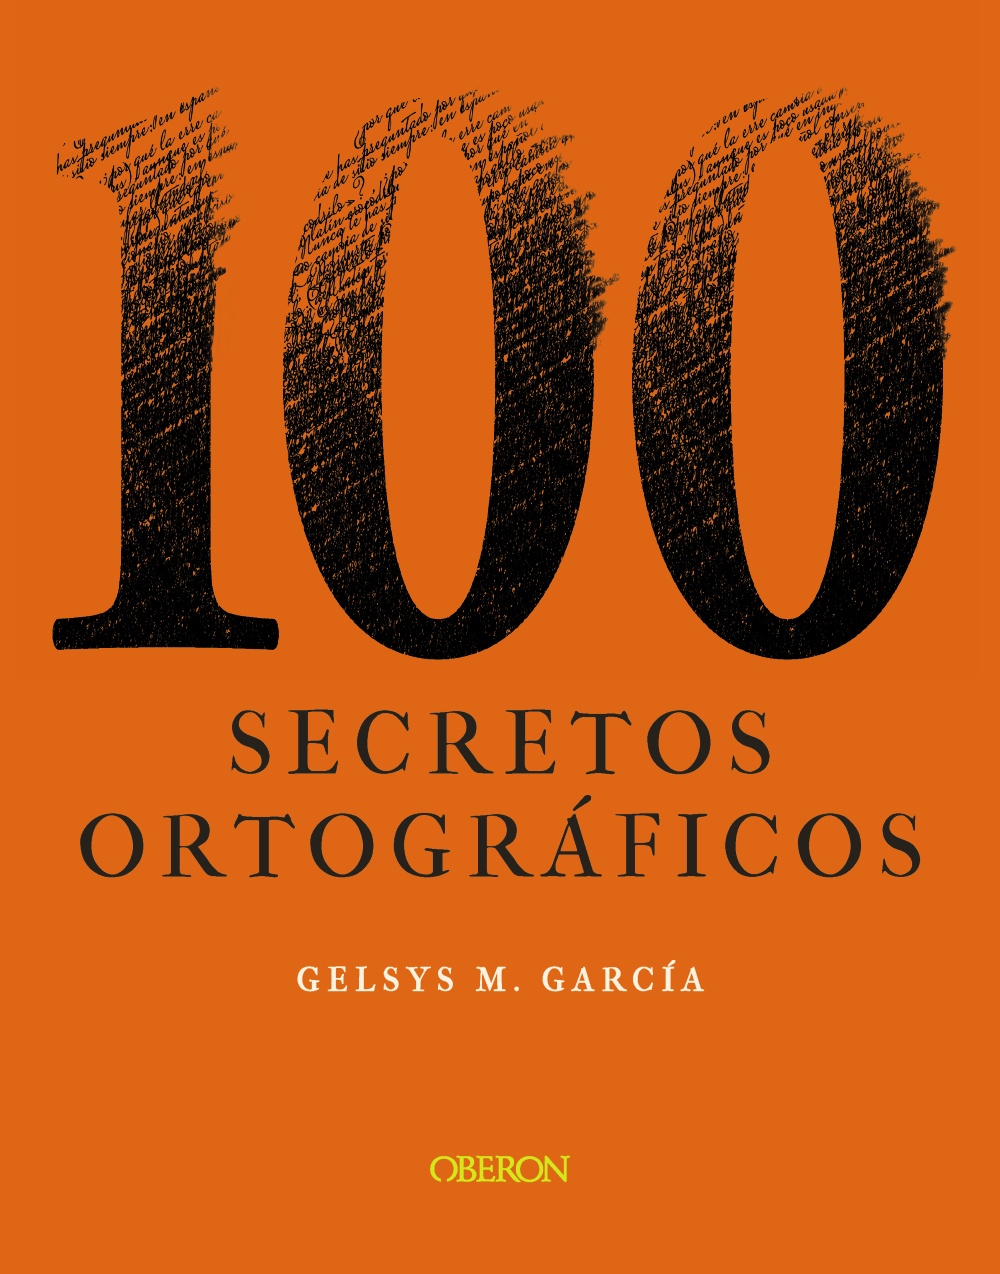 100-secretos-ortograficos-978-84-415-4427-7.jpg